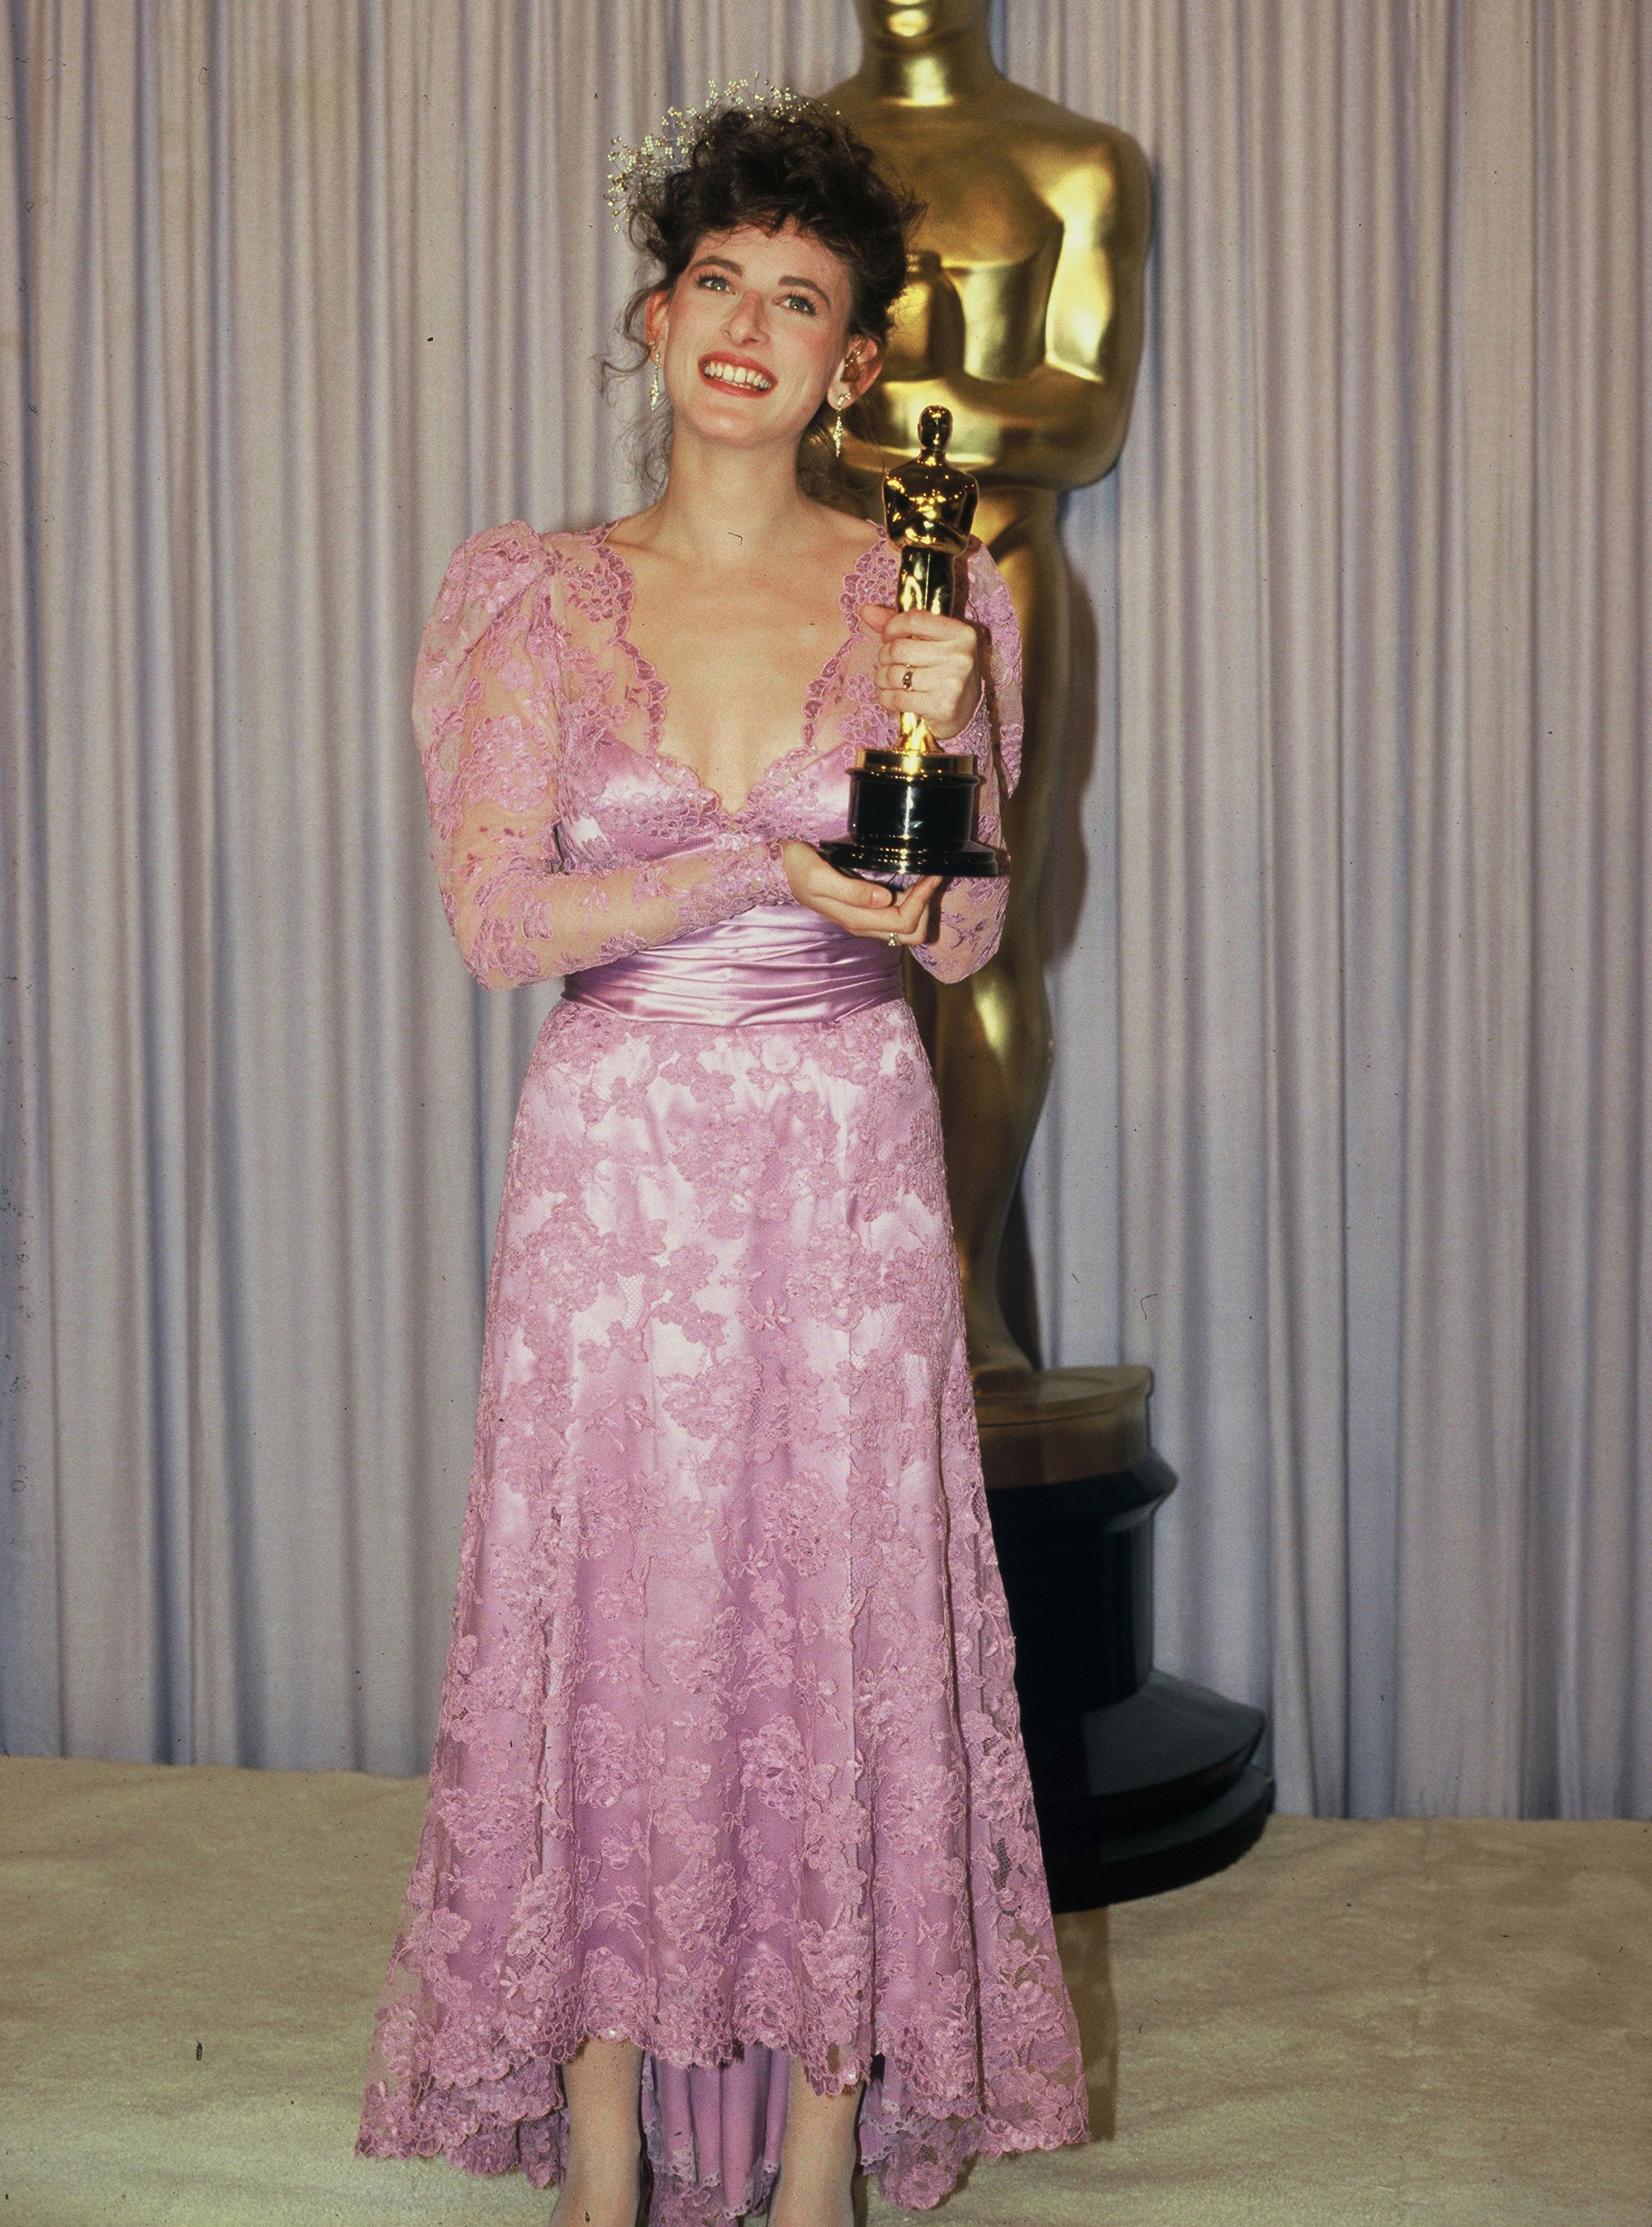 Oscars Best Dressed Oscars Best Dressed 1987 Marlee Matlin Woman 